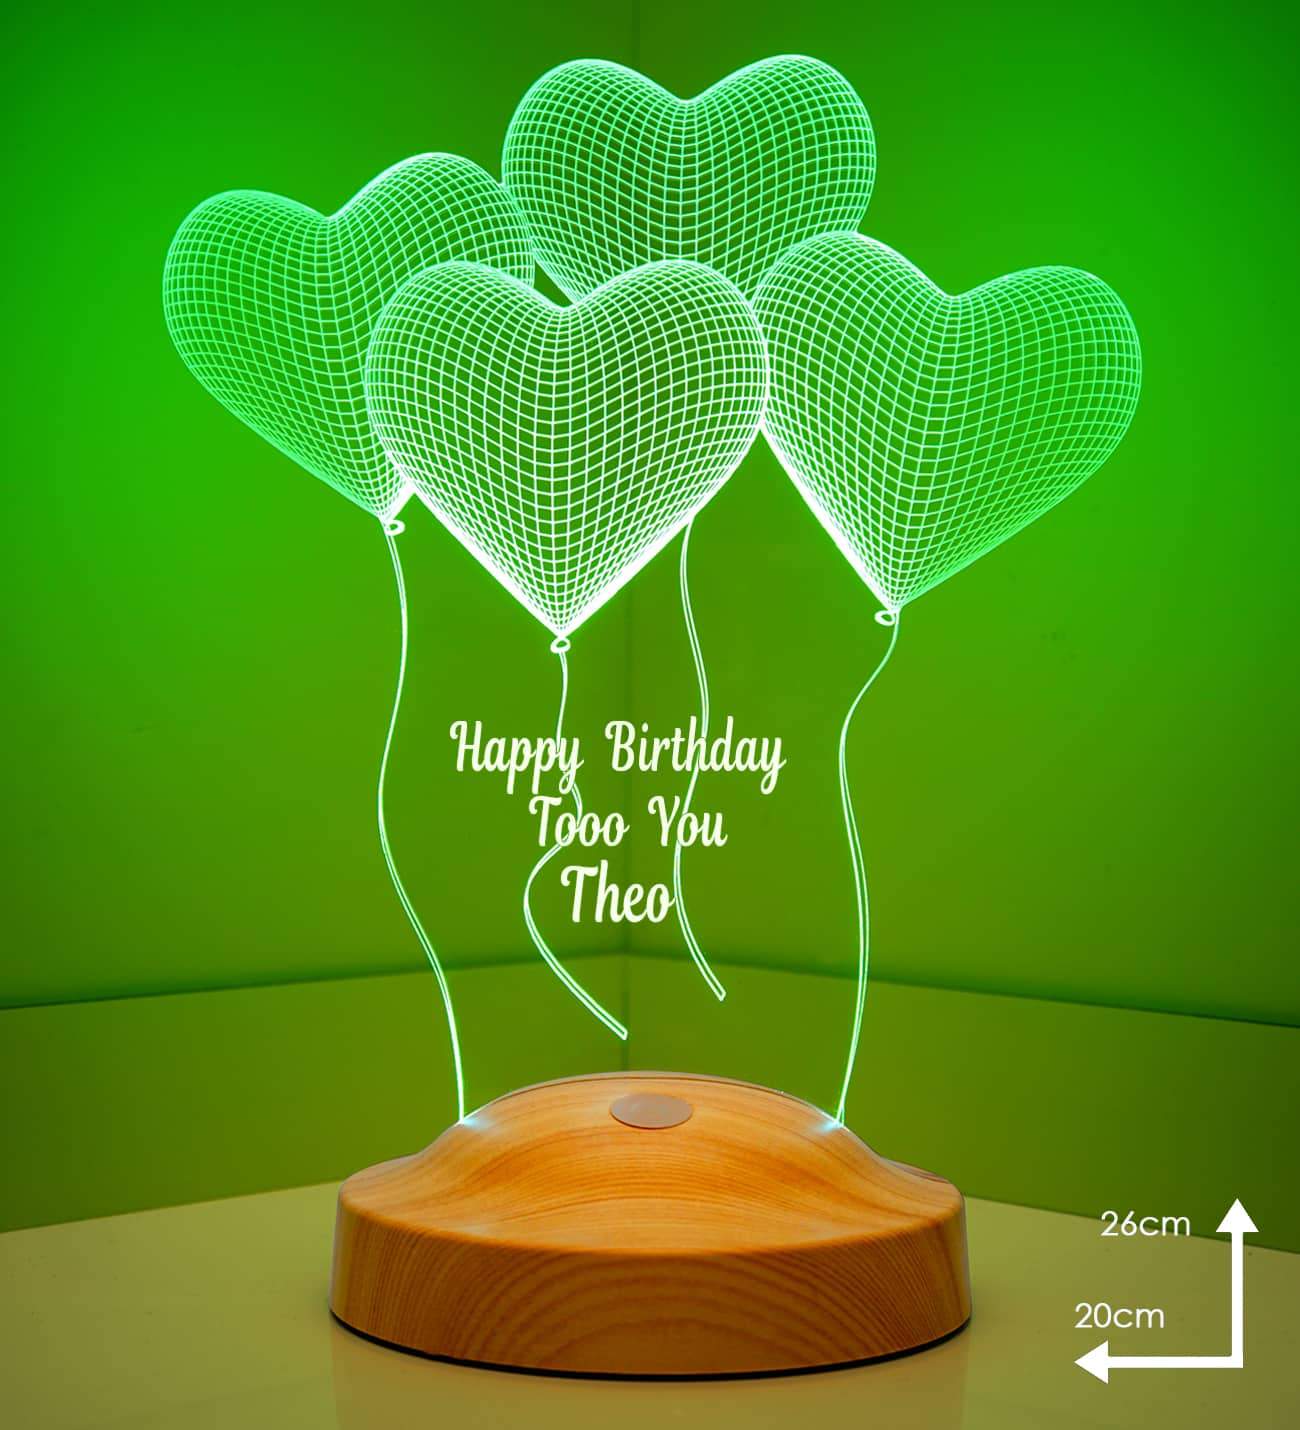 Vier Herzen Personalisierte Geburtstags Geschenke Lampe mit Wunschtext